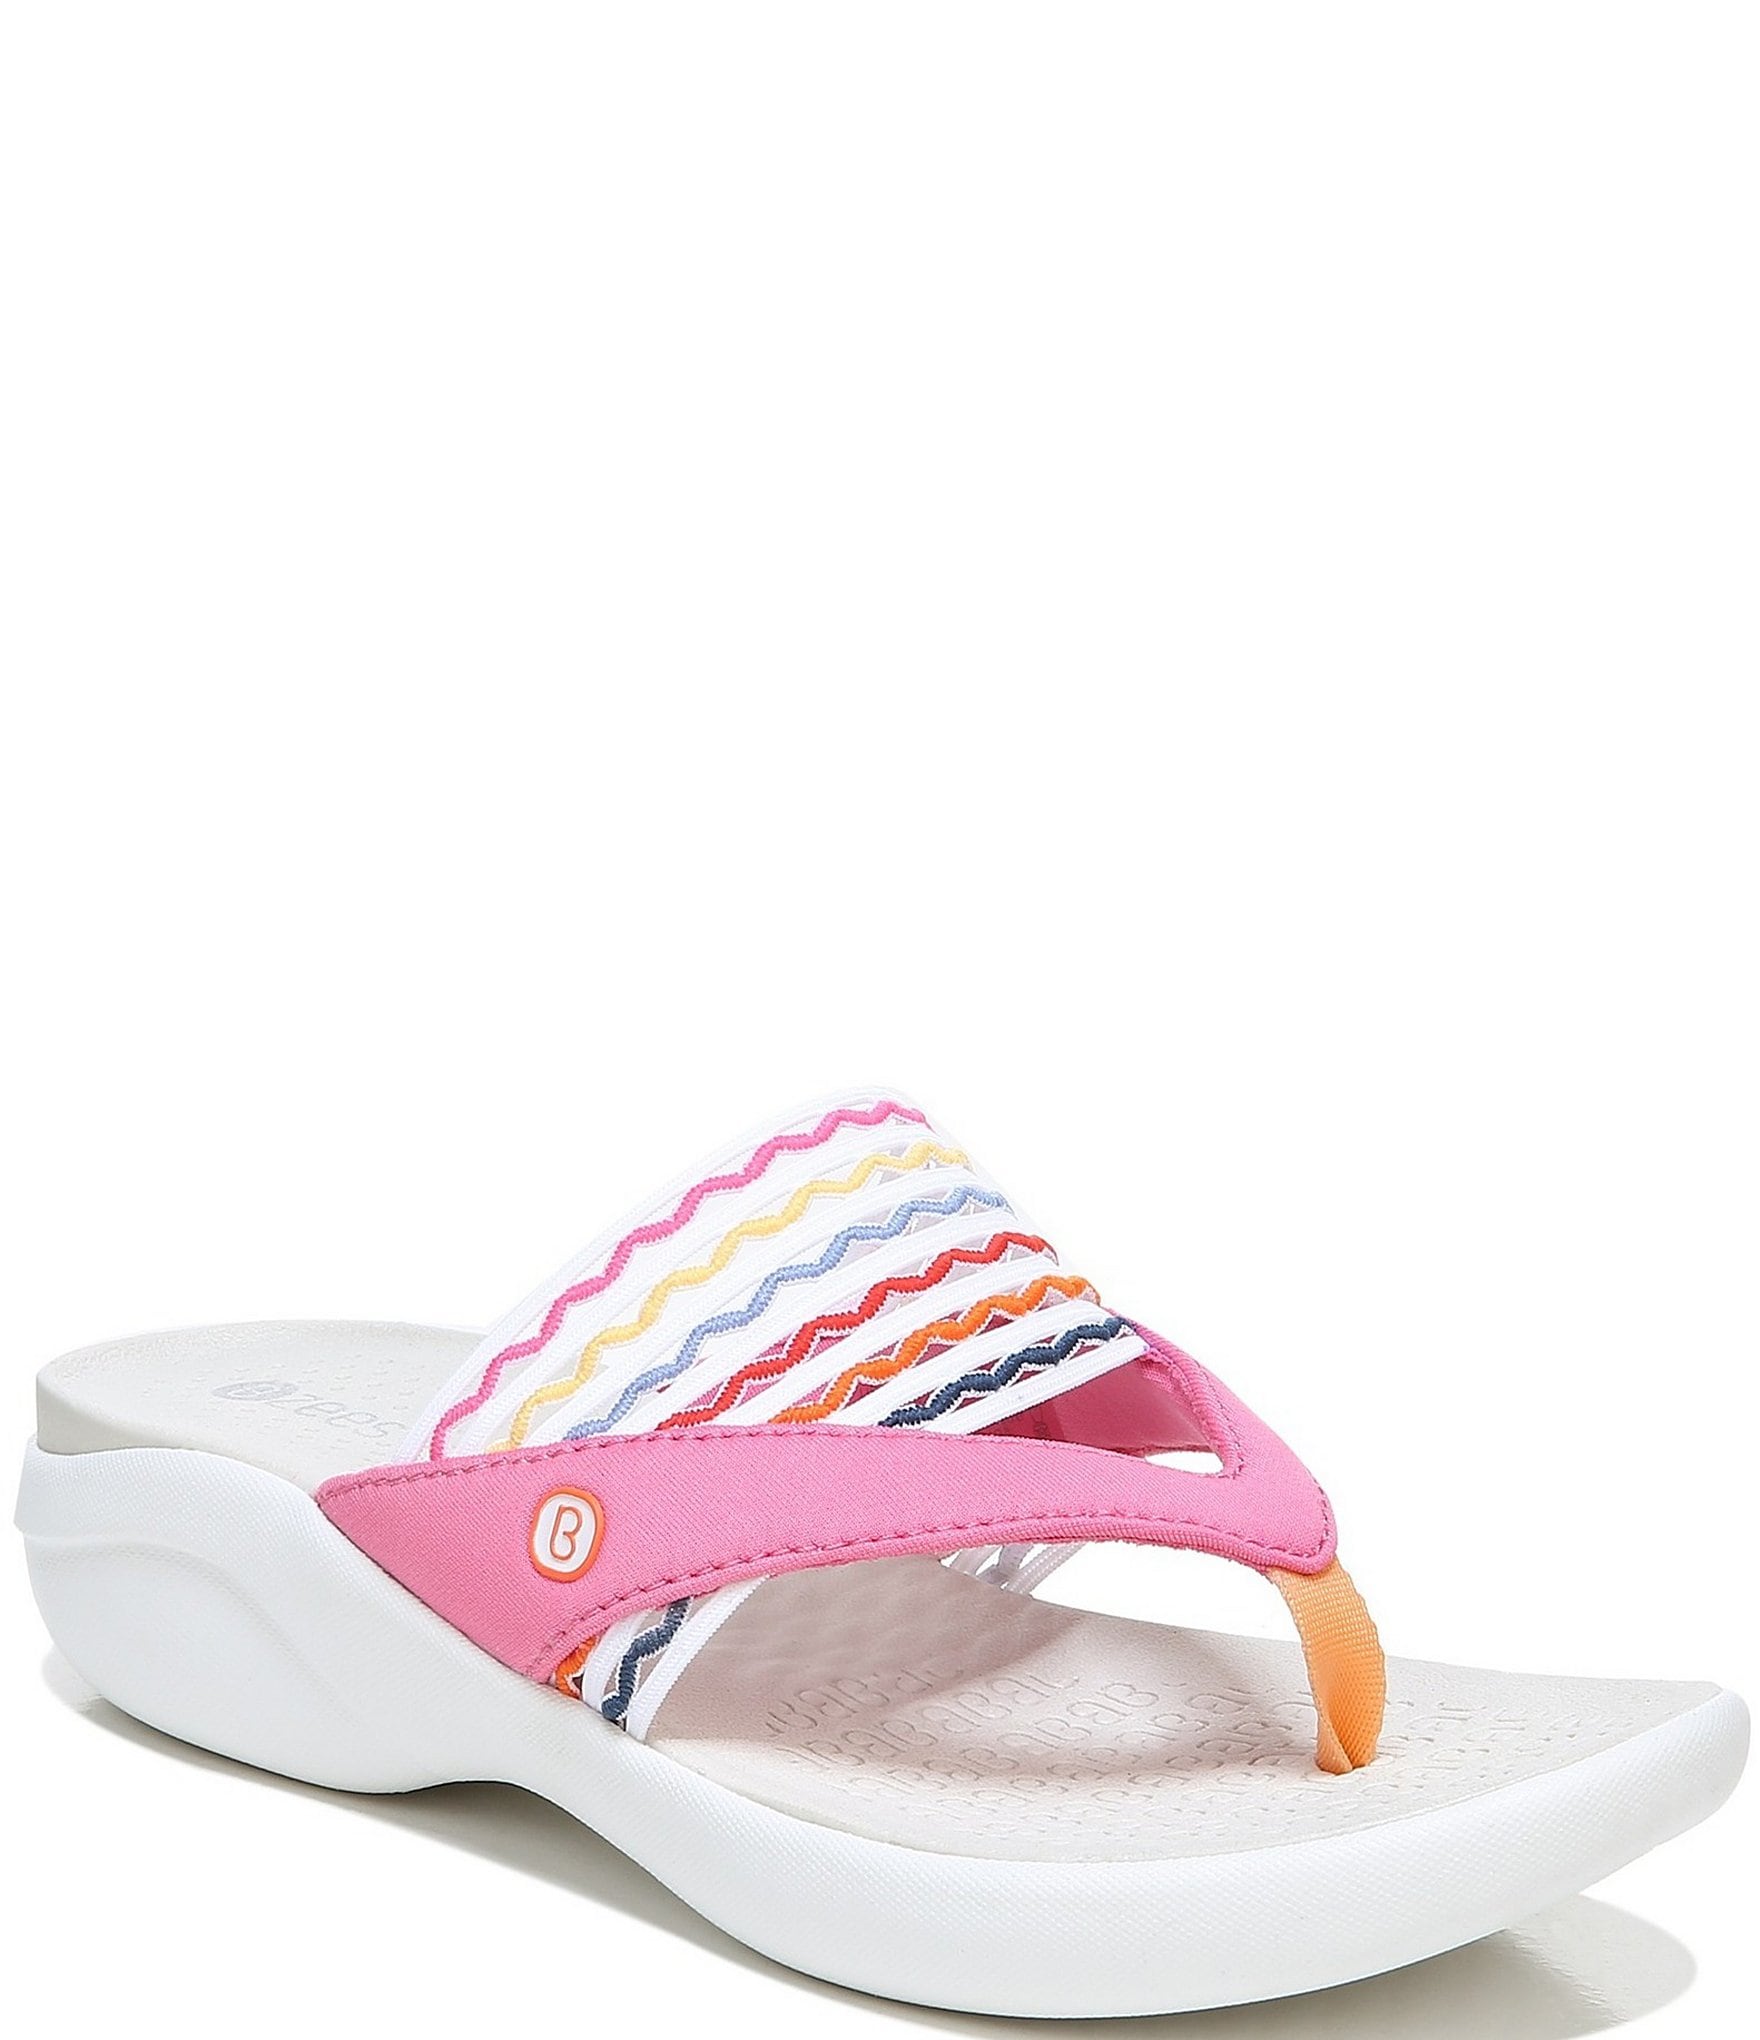 Chanel Love Heart Summer Slide Sandals - Binteez